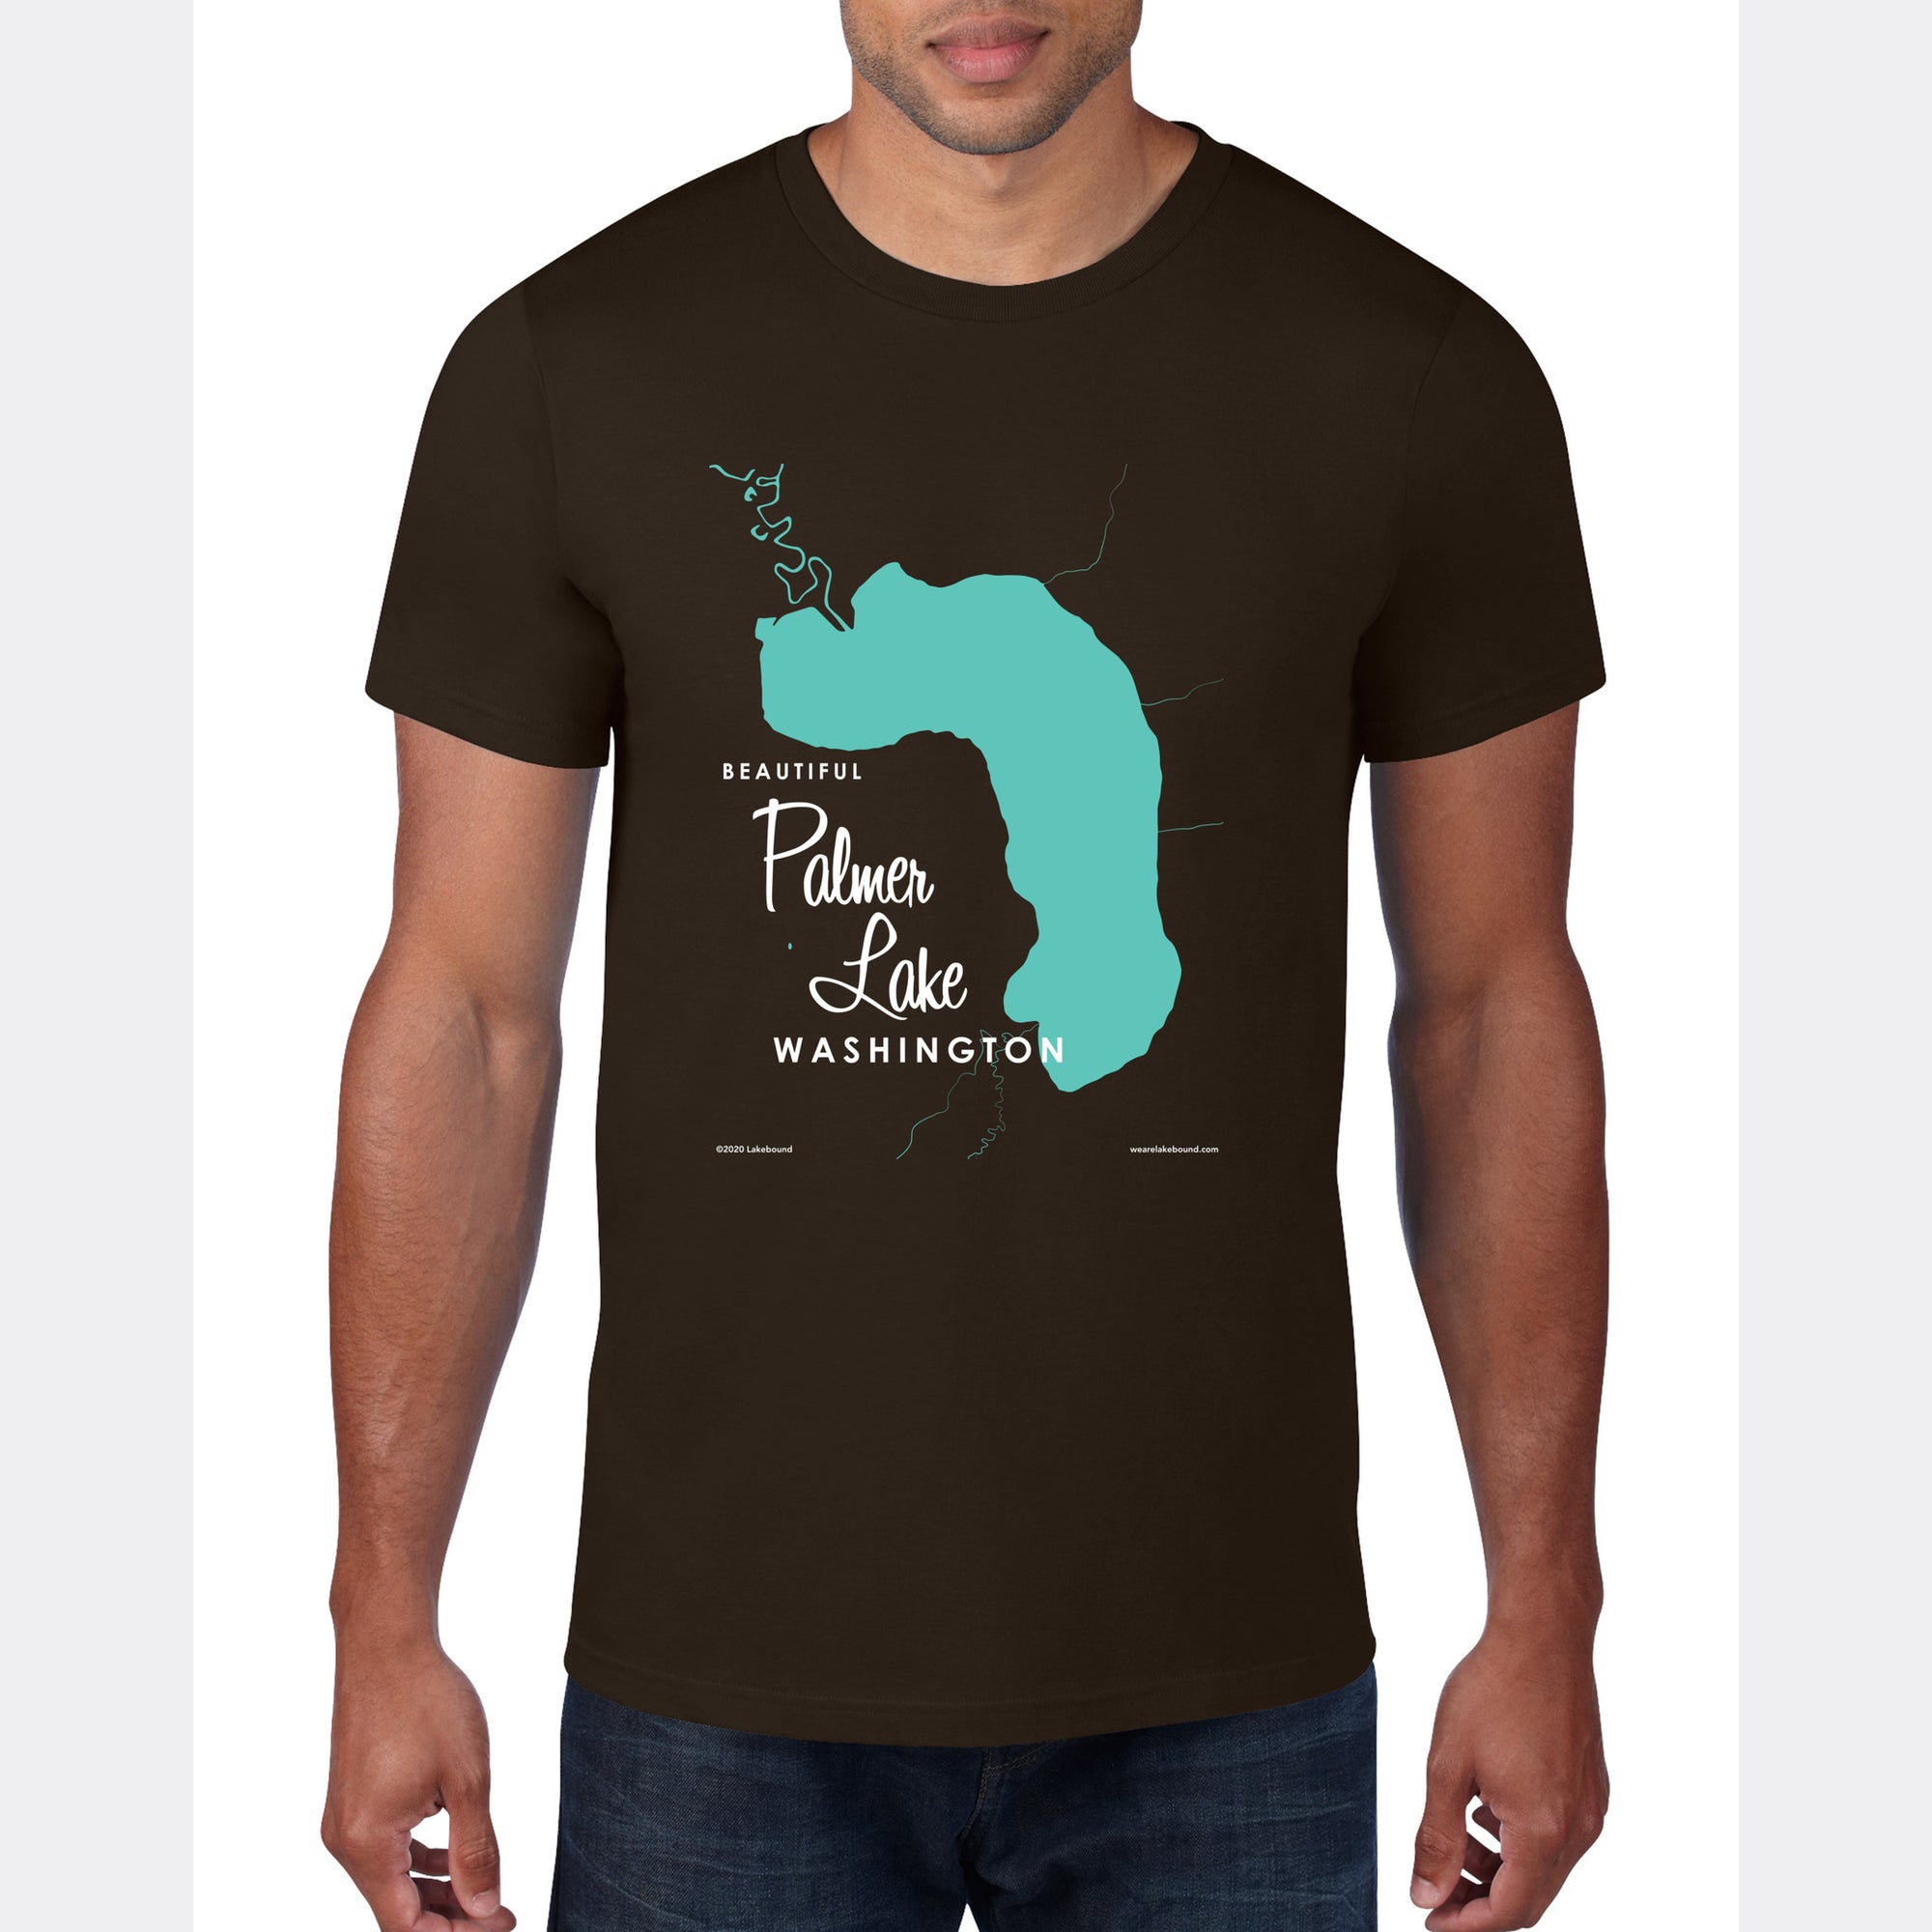 Palmer Lake Washington, T-Shirt